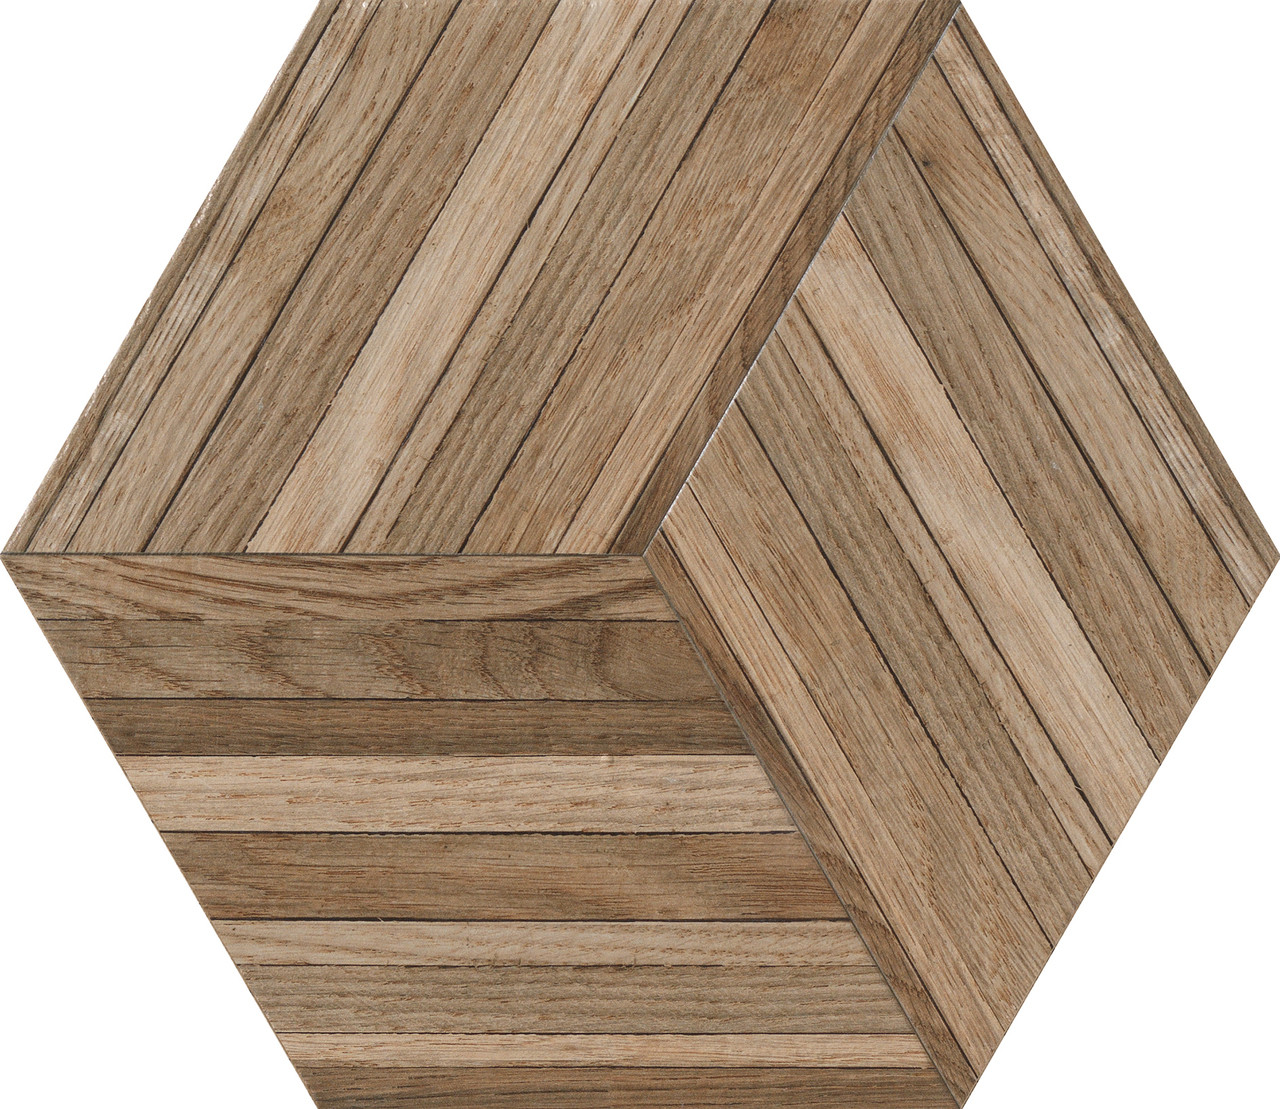 Special Order Wood Tiles For Decks